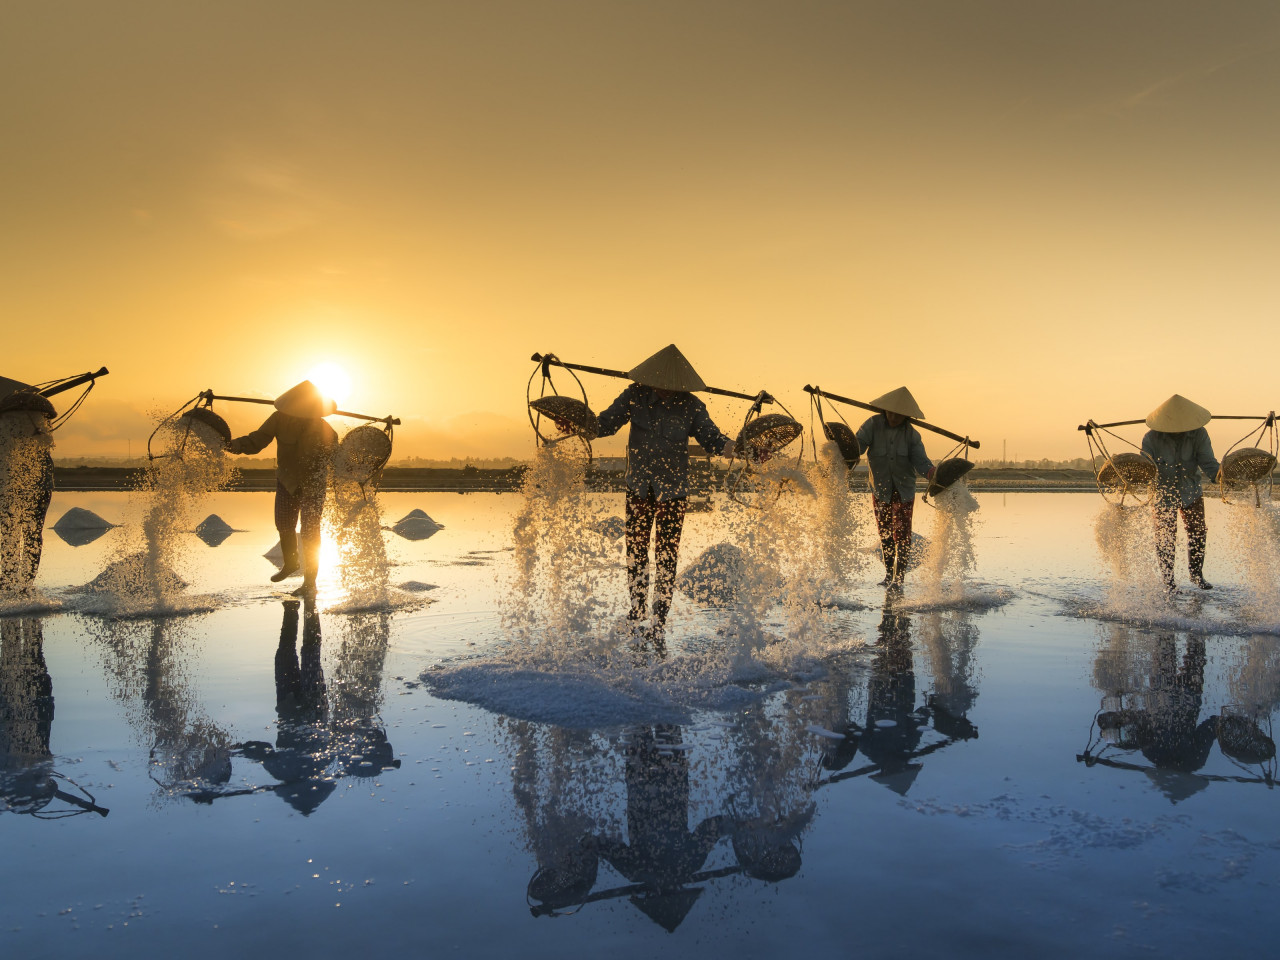 People harvesting salt in Vietnam wallpaper 1280x960